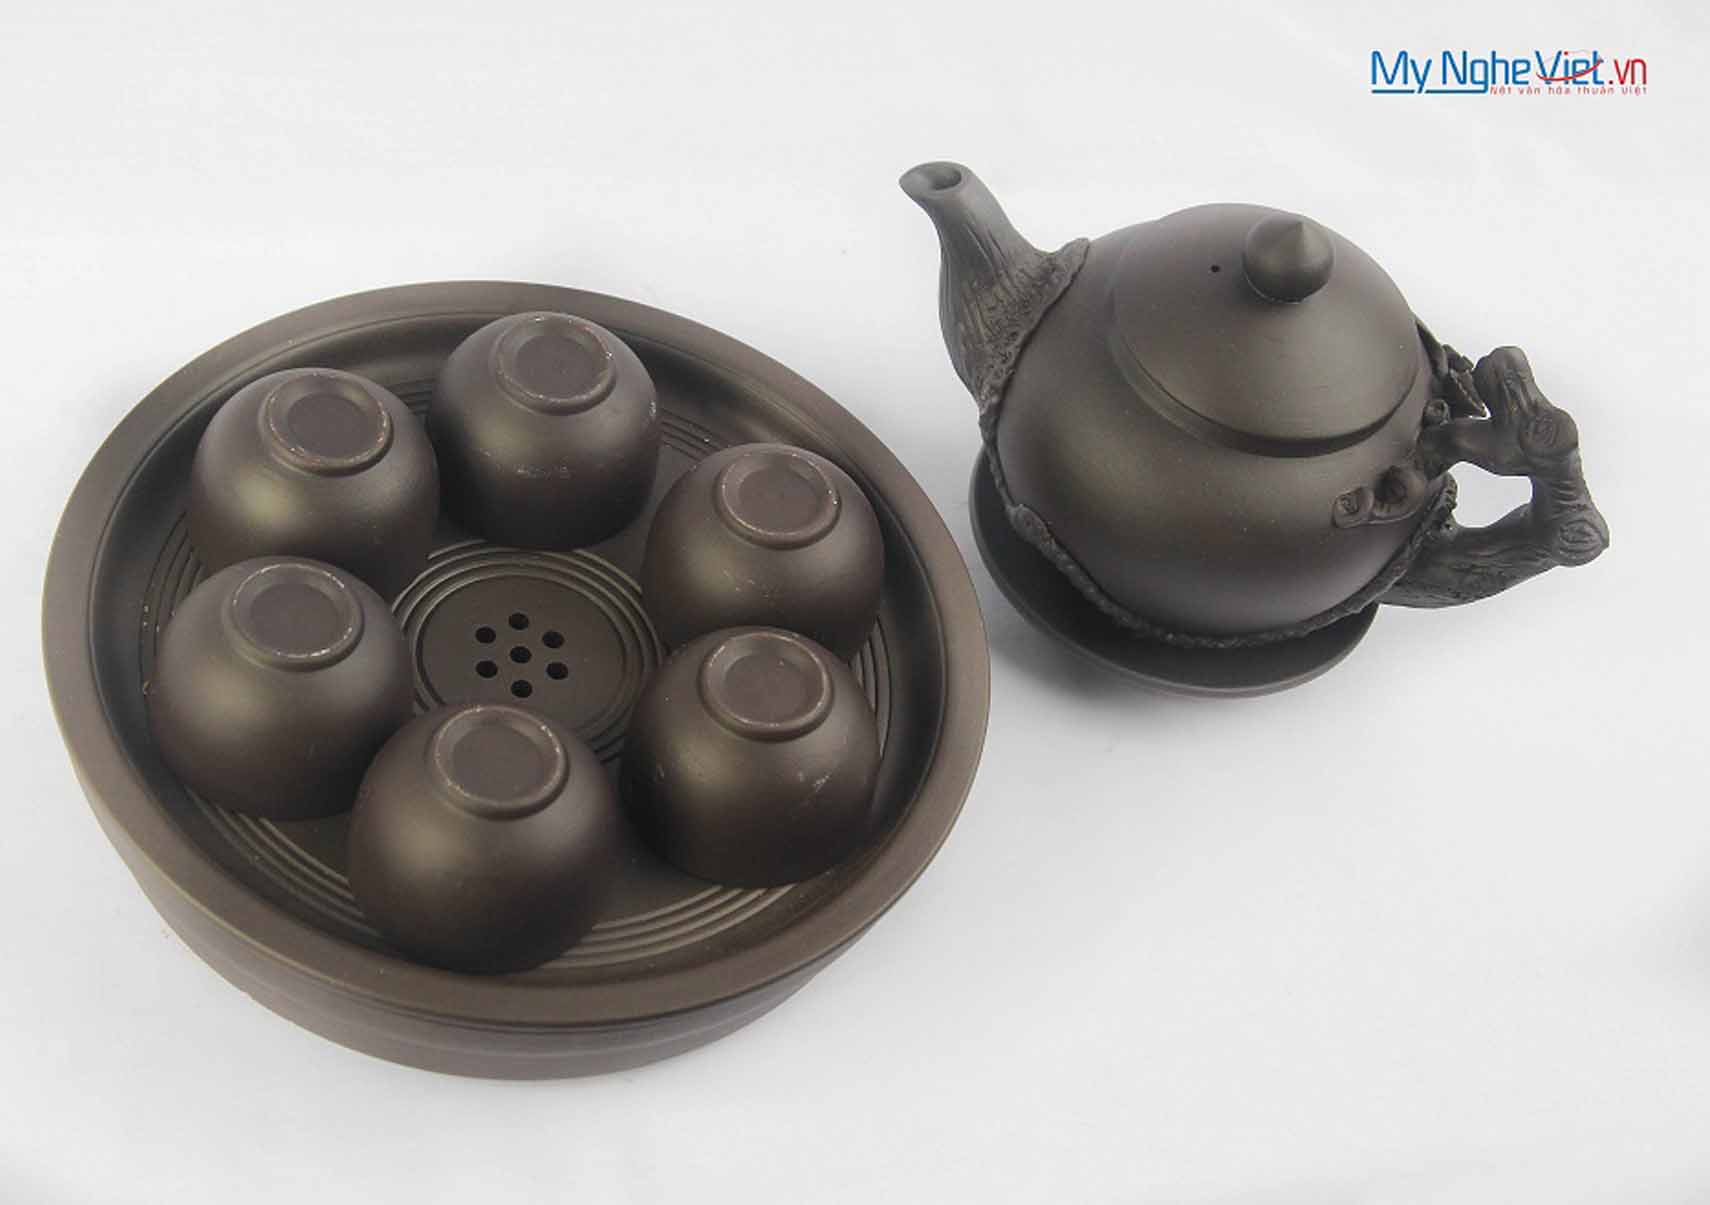 Tử Sa Tea set with pottery tray no.1 - MNV-TS044